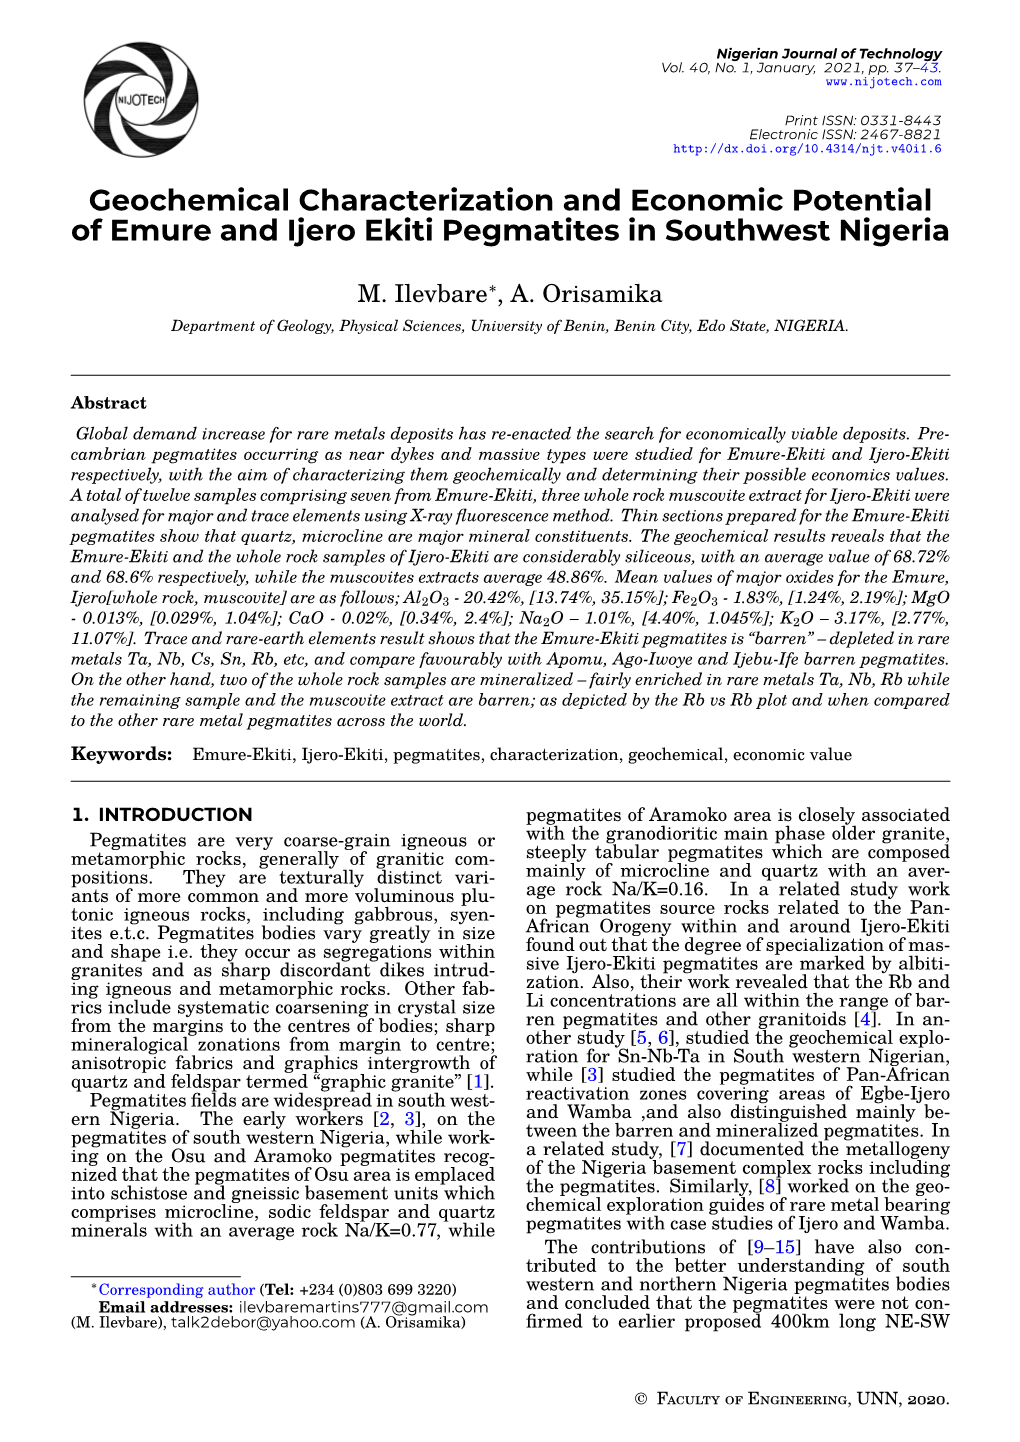 Geochemical Characterization and Economic Potential of Emure and Ijero Ekiti Pegmatites in Southwest Nigeria